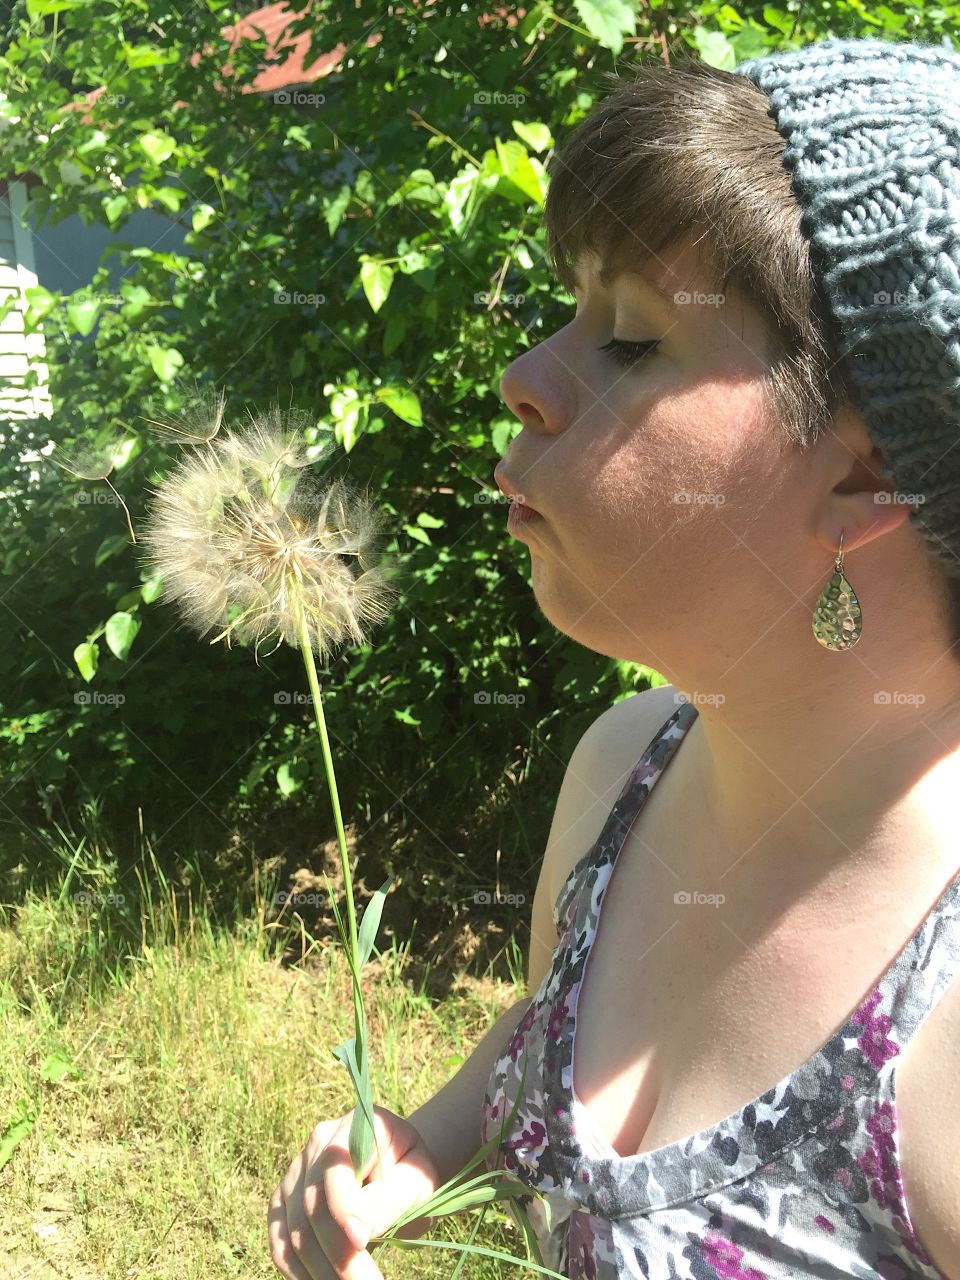 Blowing dandelion
